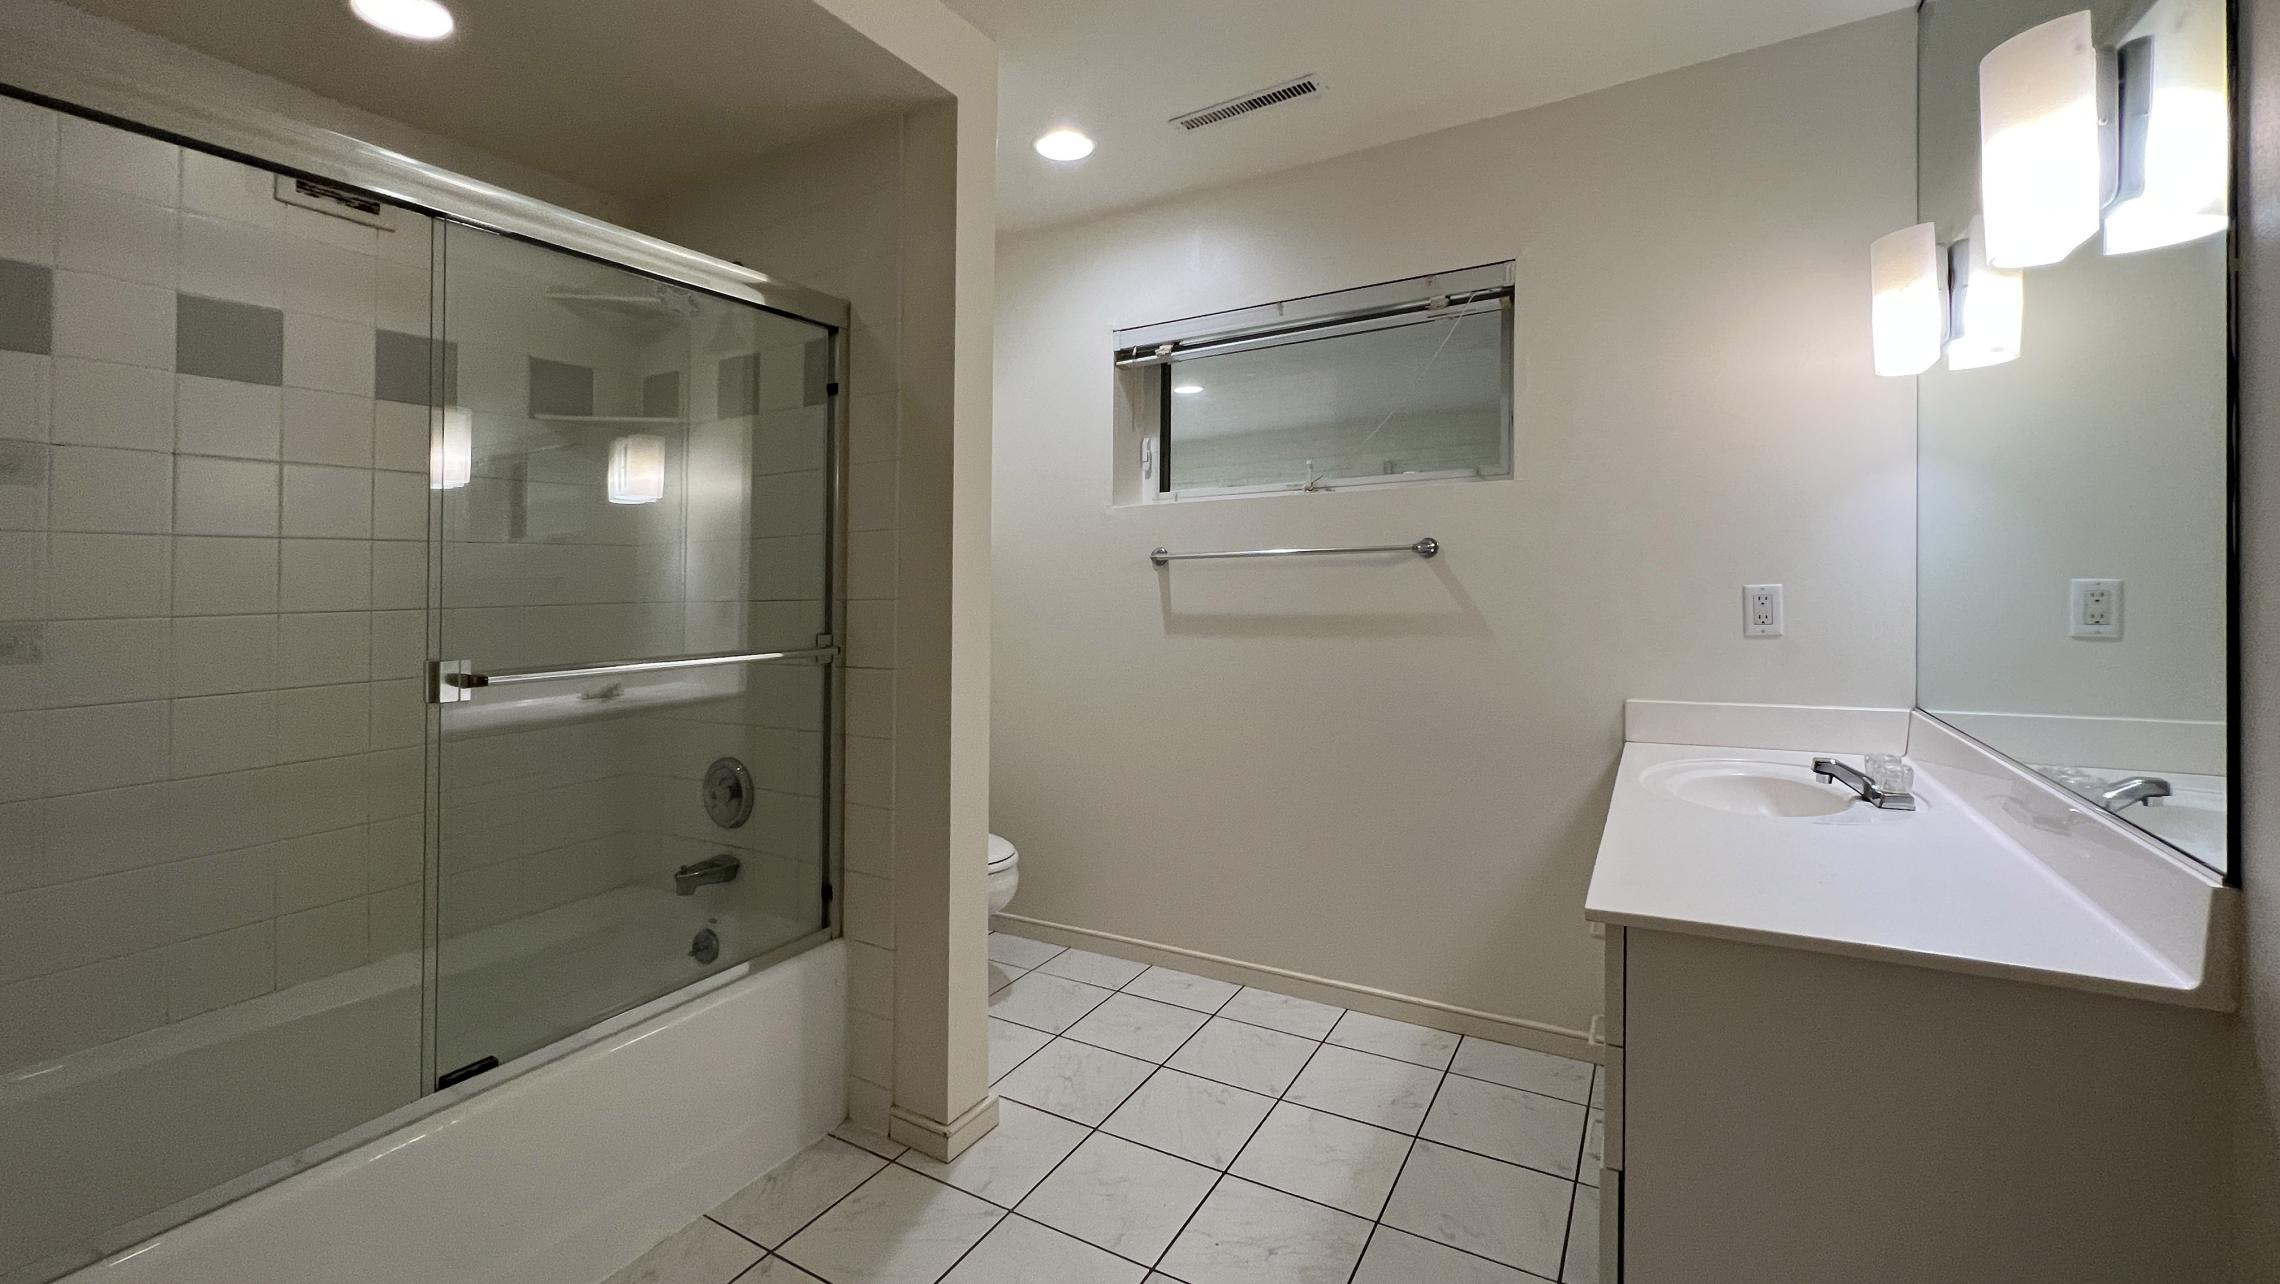 401 Holtzman - Duplex - Two - Bedroom - Two Bathroom - Den - Sunroom - Garage - Yard - Patio